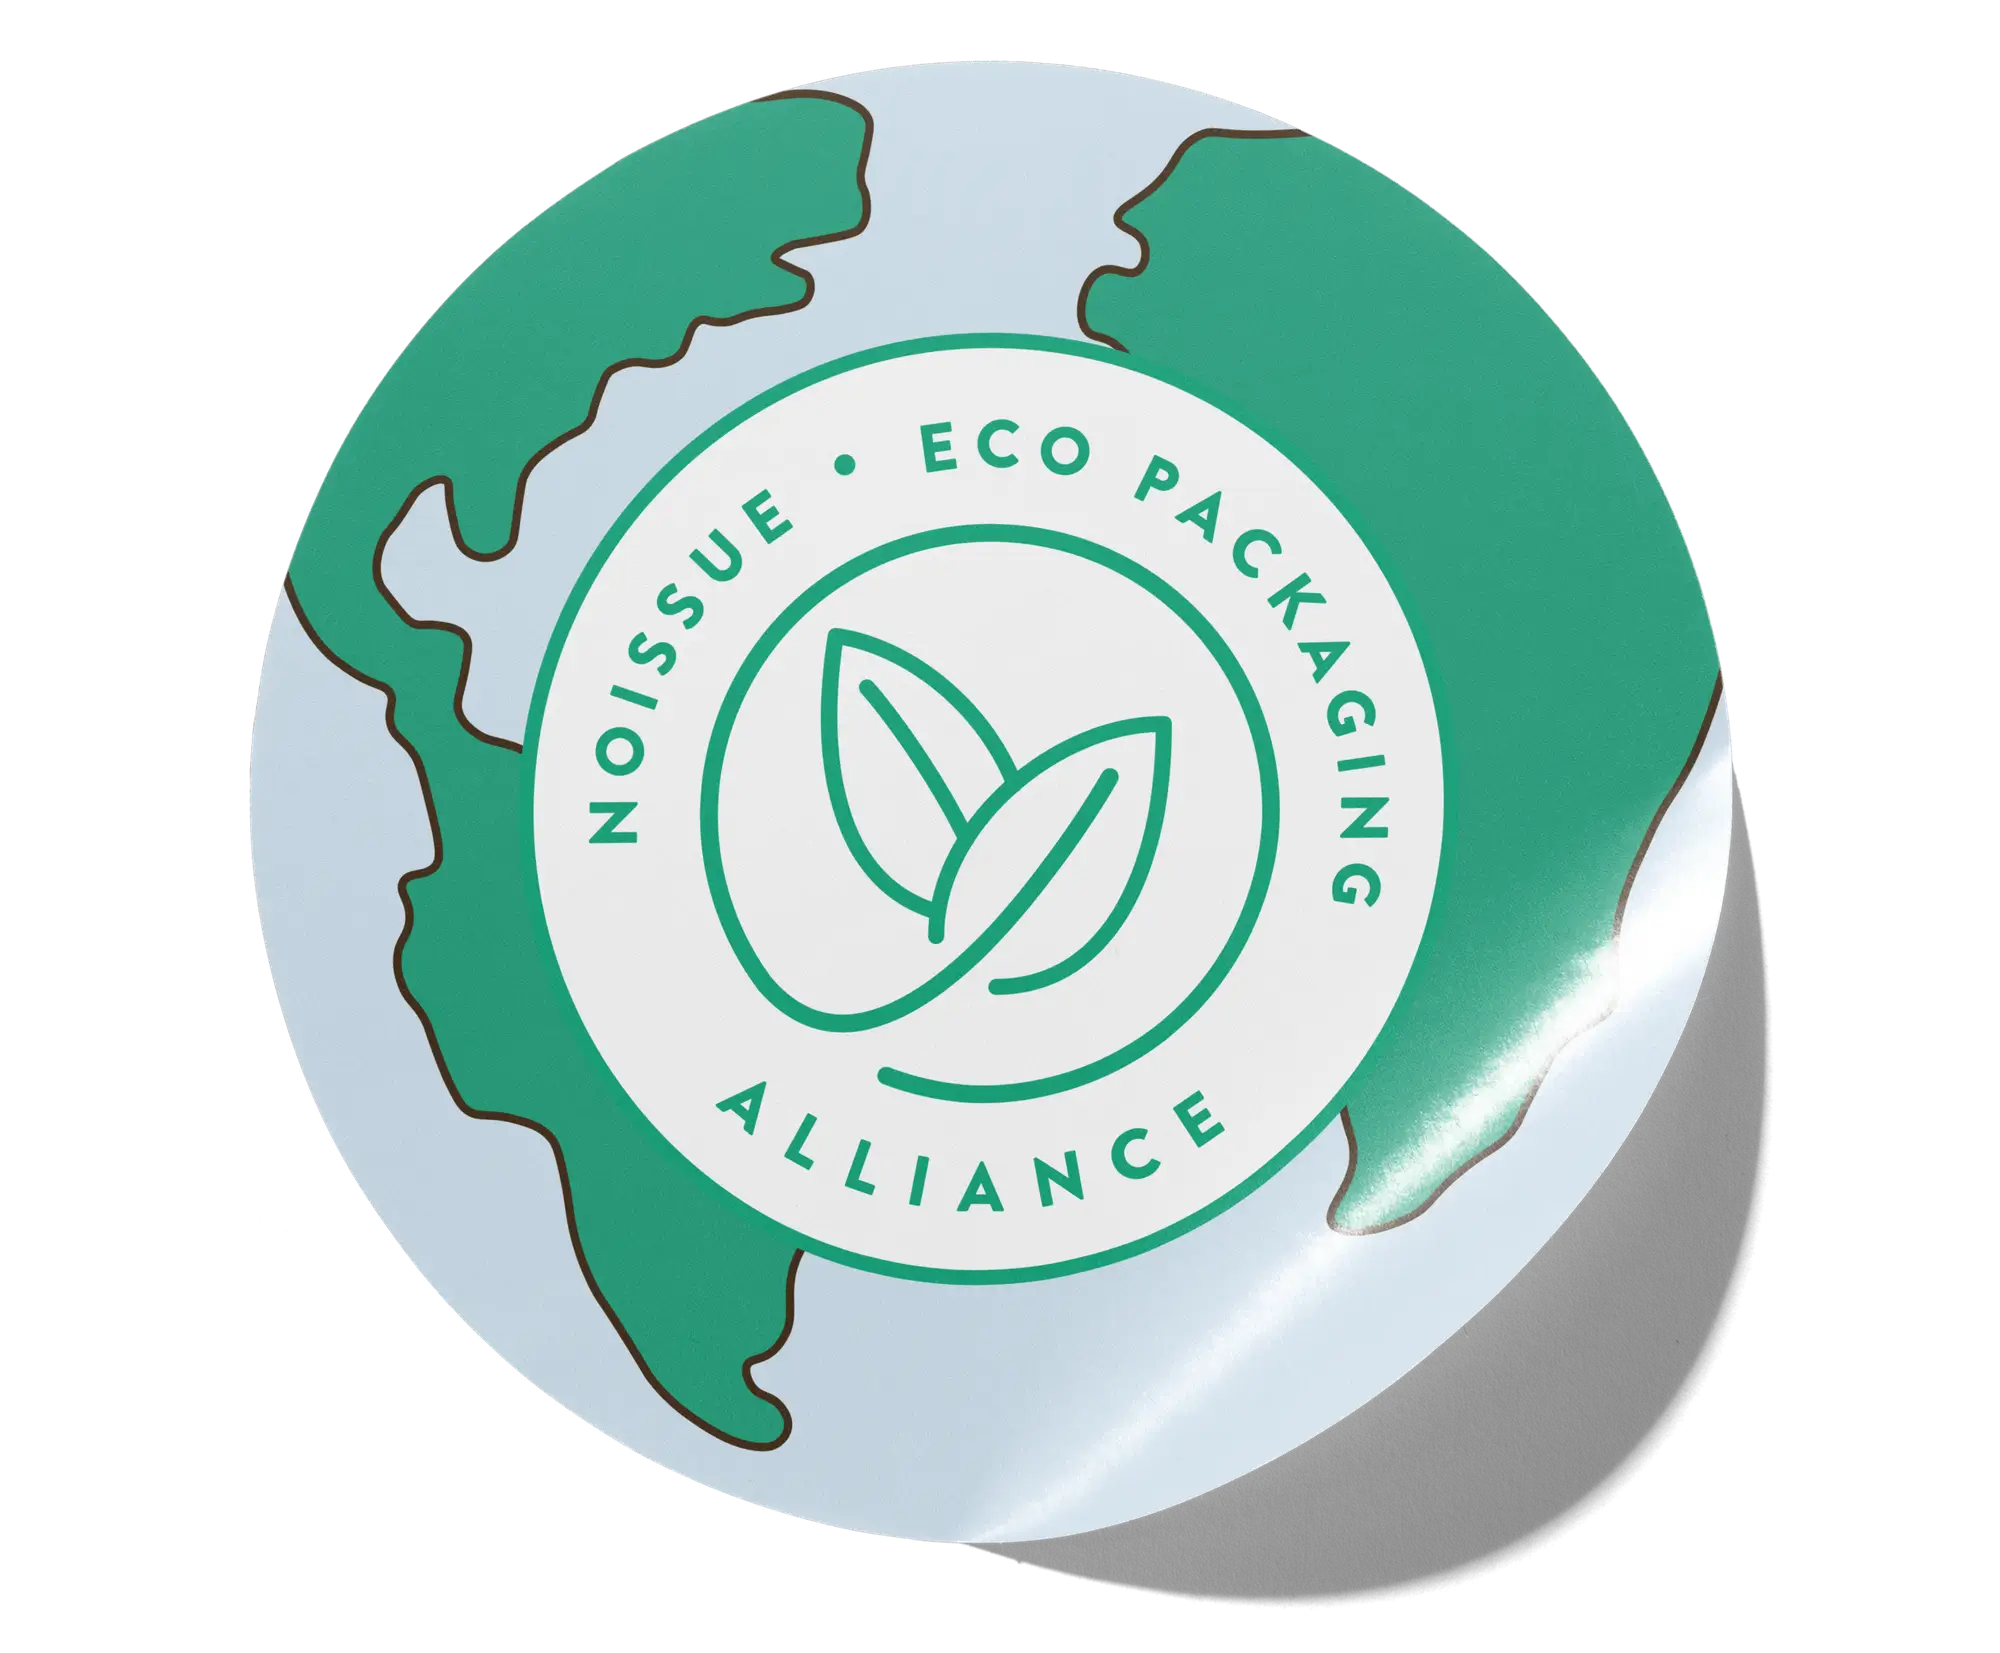 2020: Eco-Alliance reaches 20,000 members!